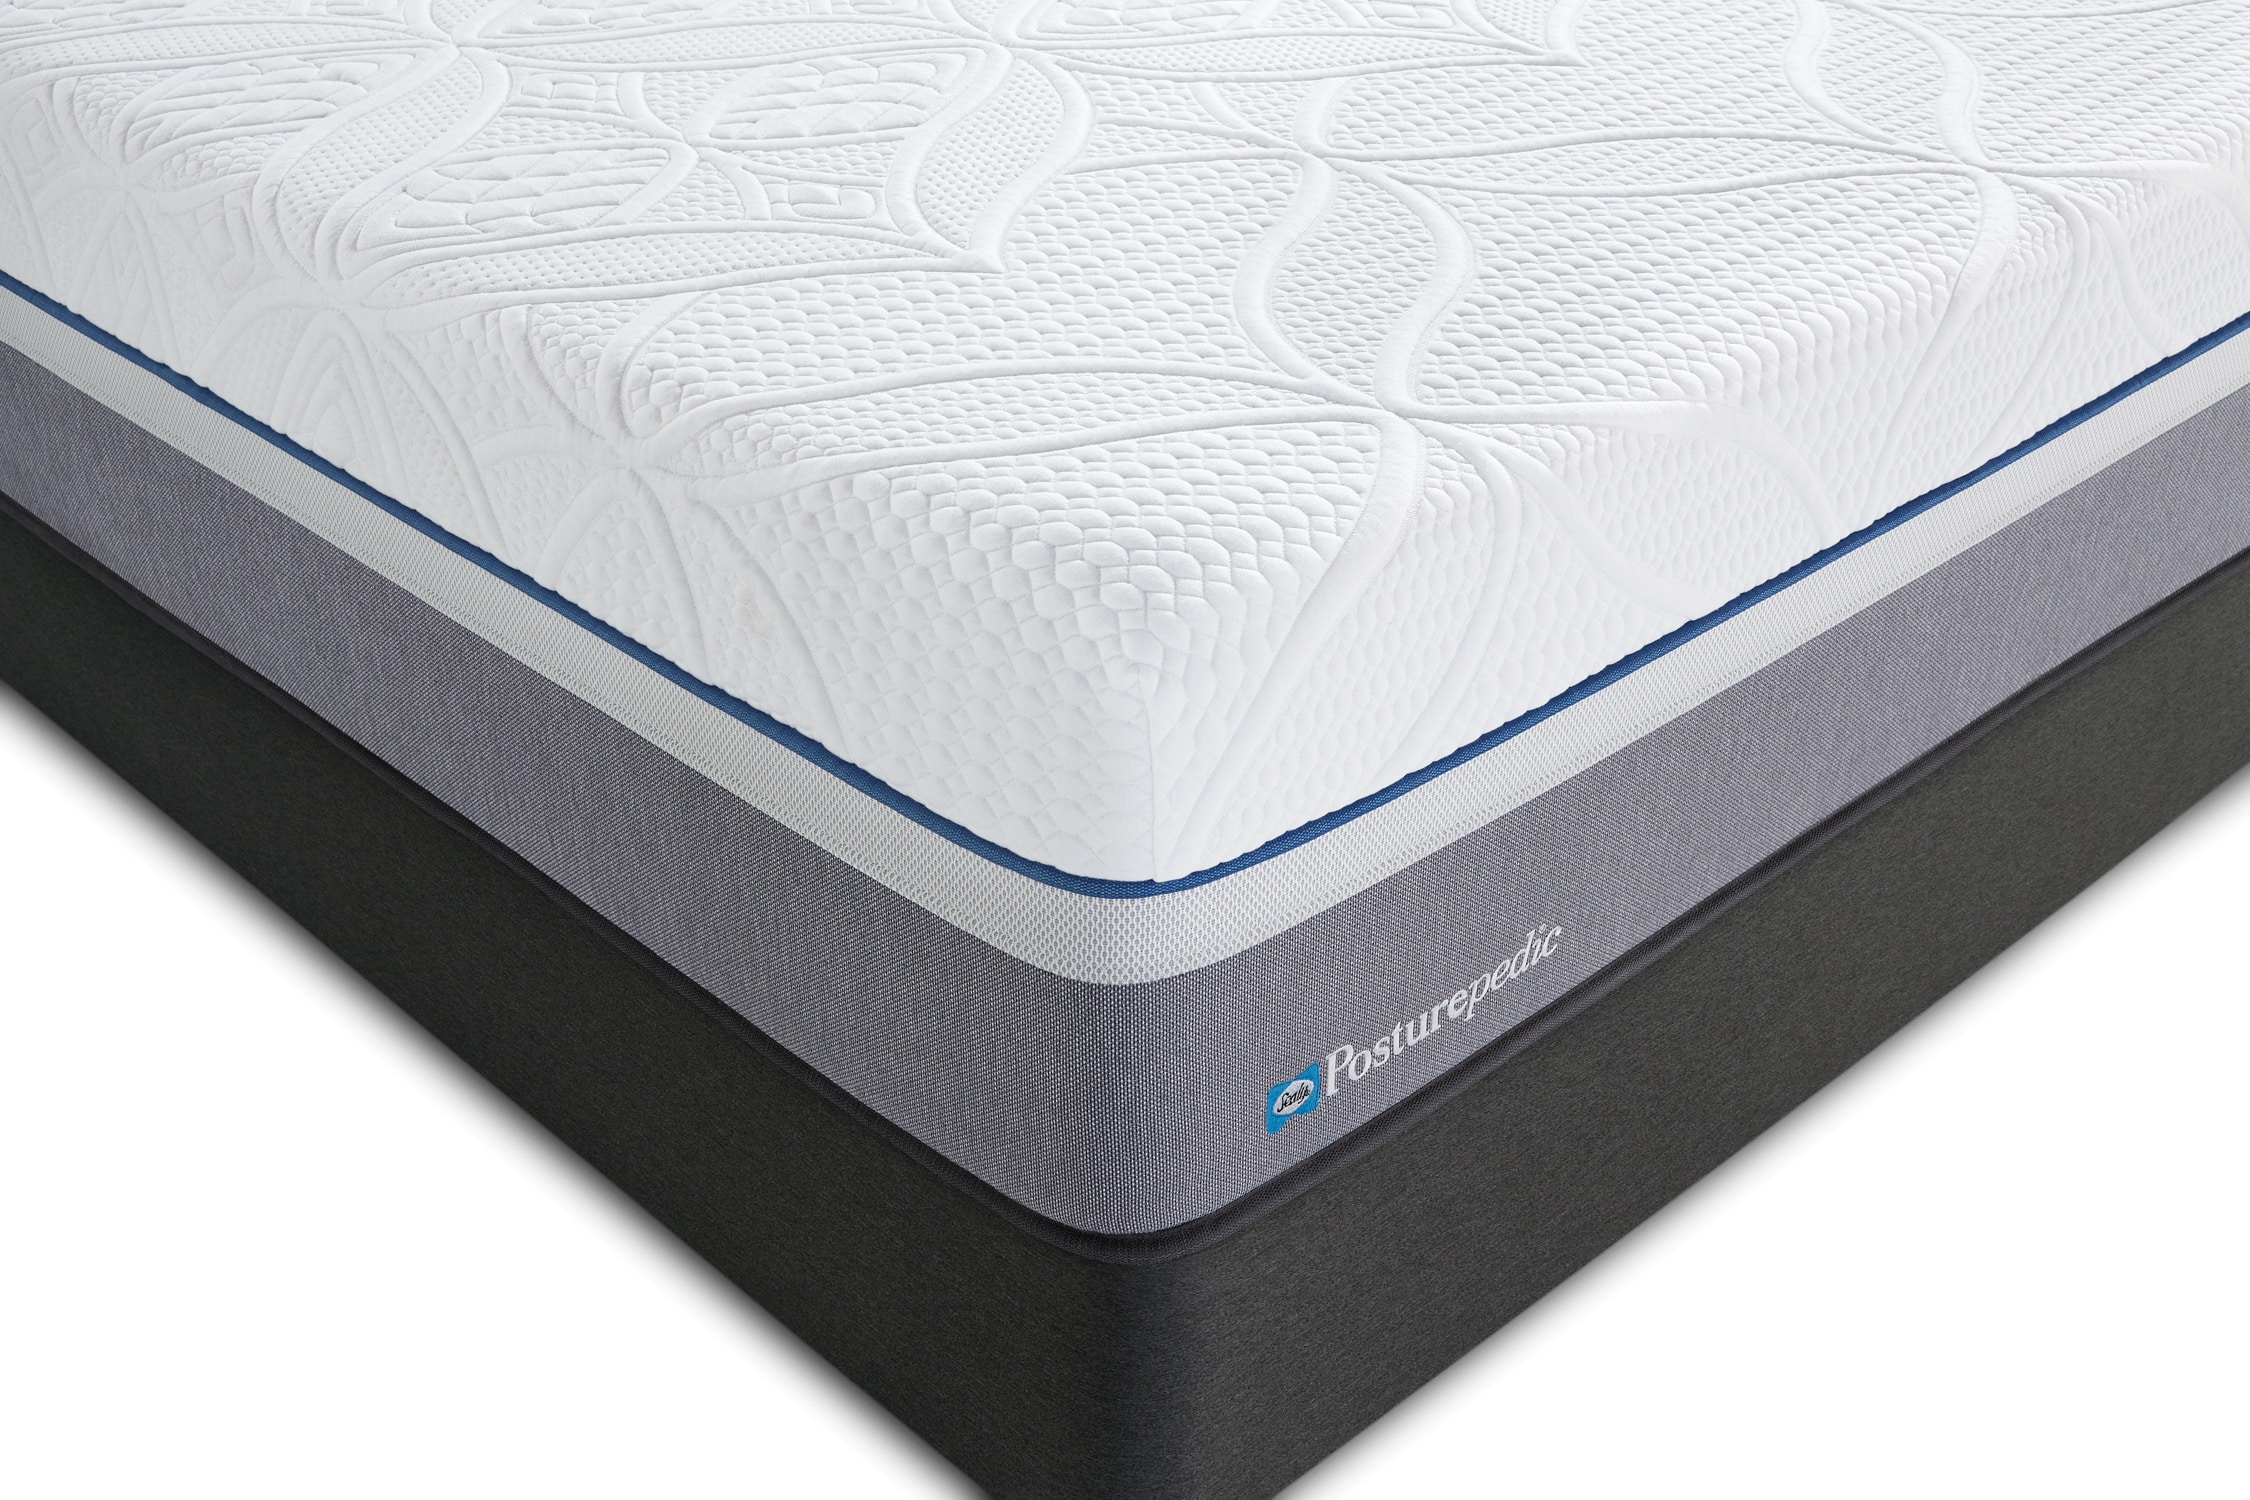 mattress firm sealy posturepedic hybrid elite kelburn